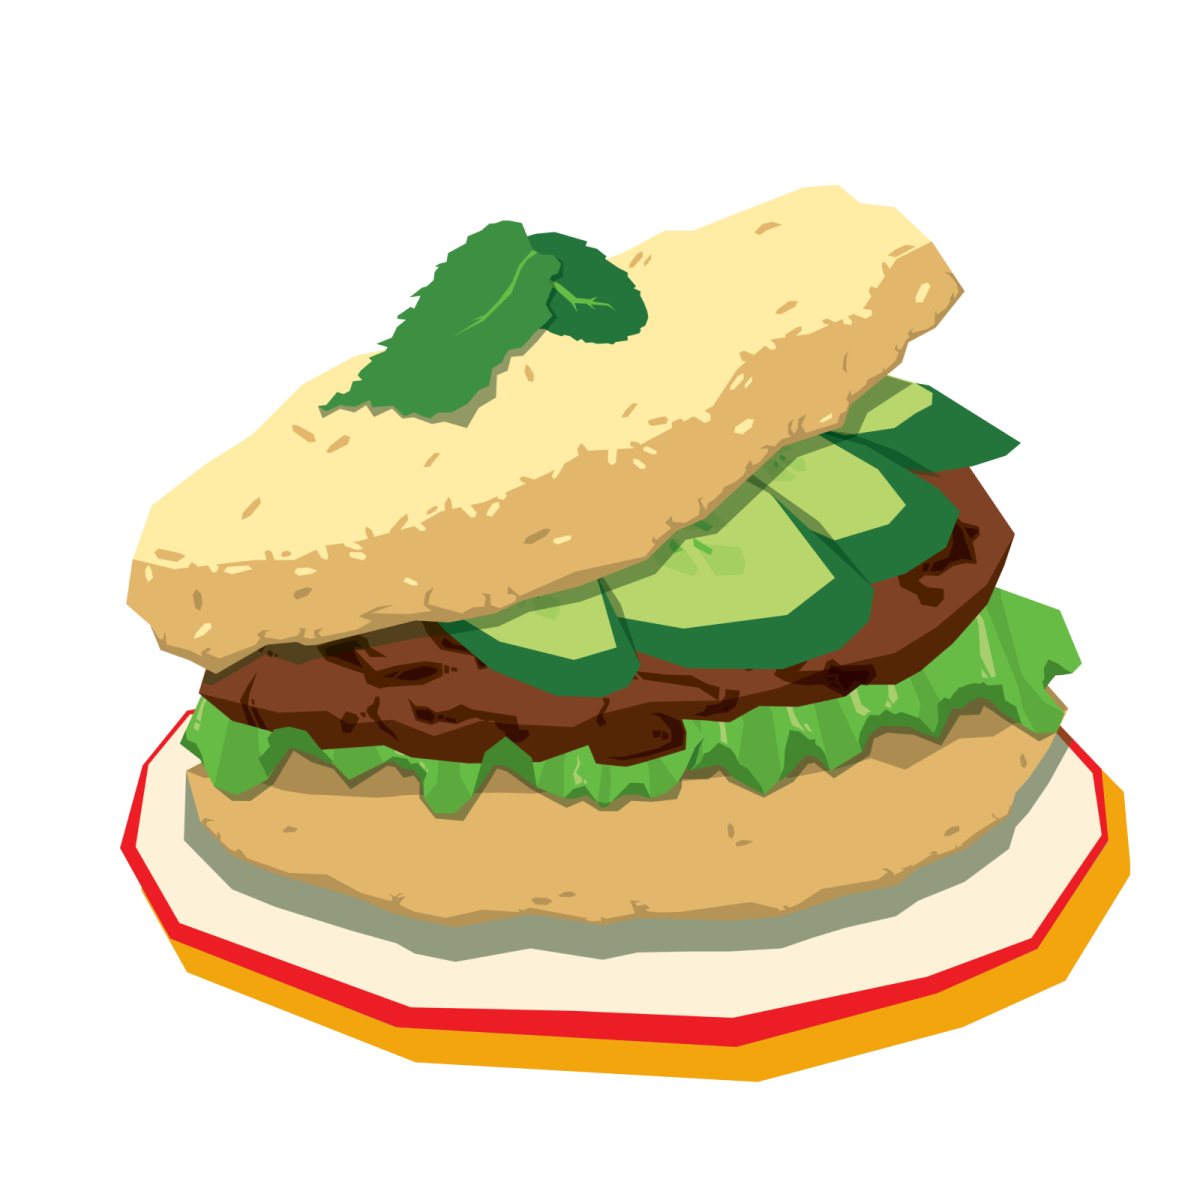 Illustration of a burger